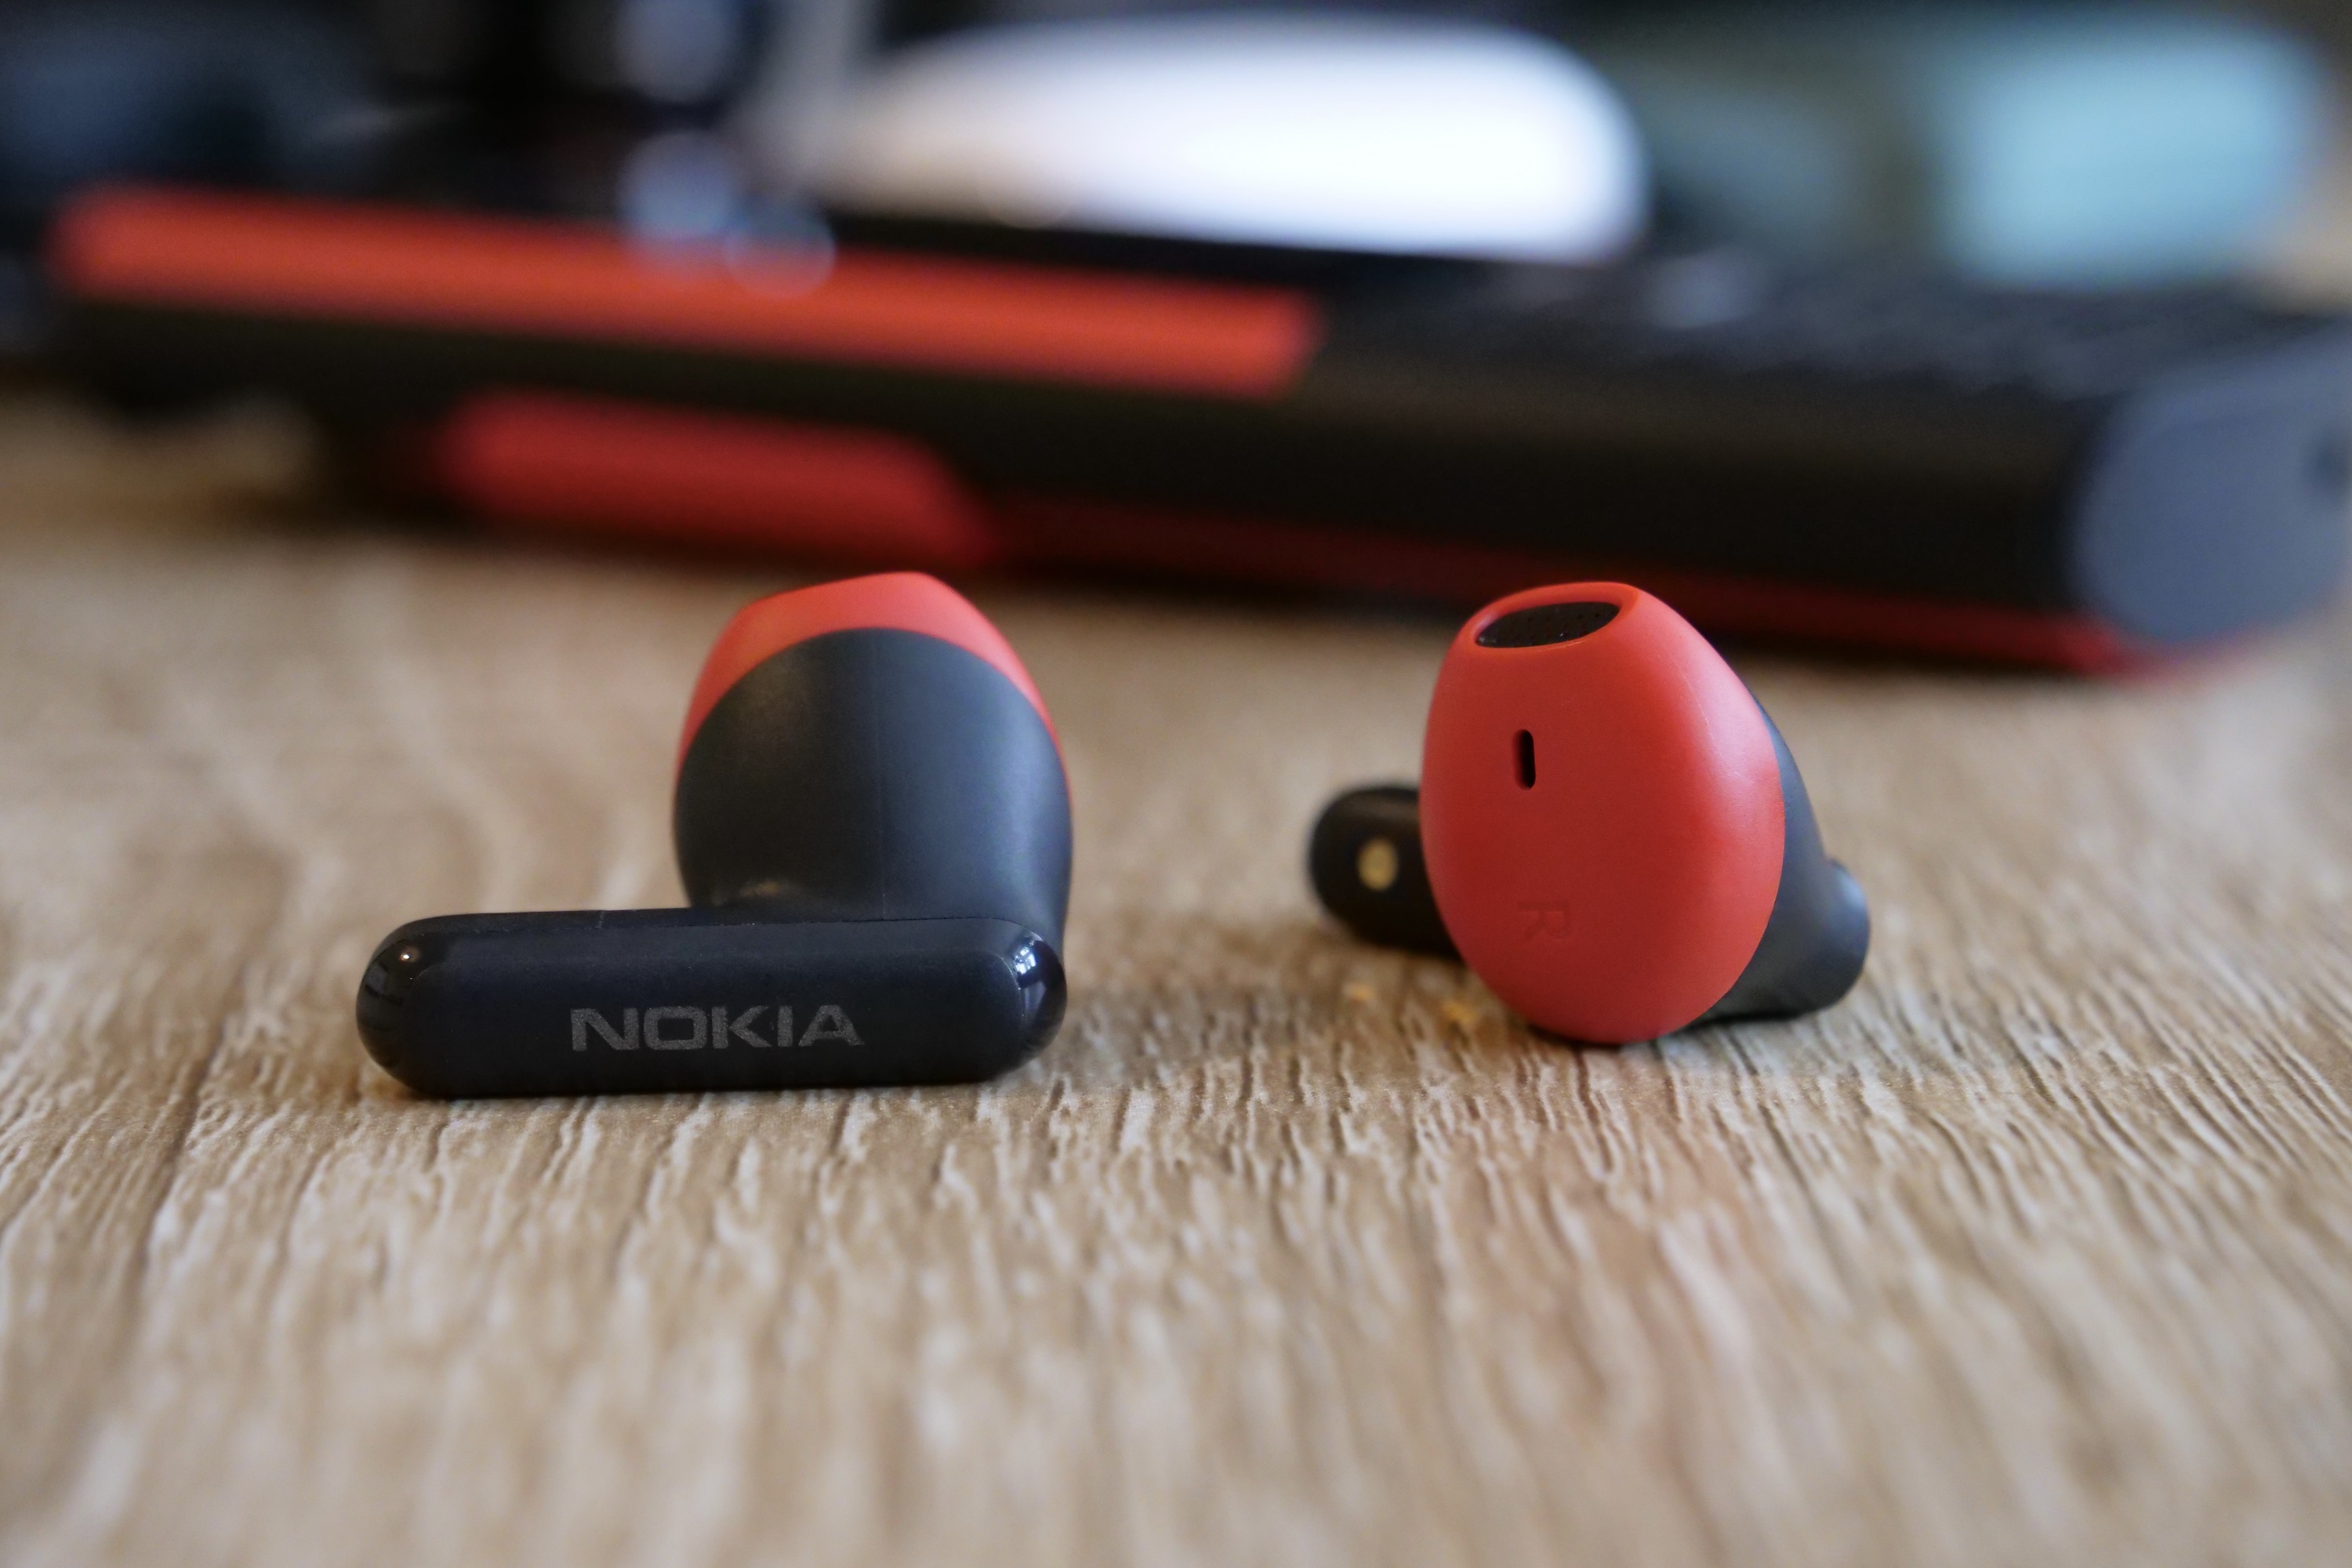 The Nokia 5710 XpressAudio's earbuds.